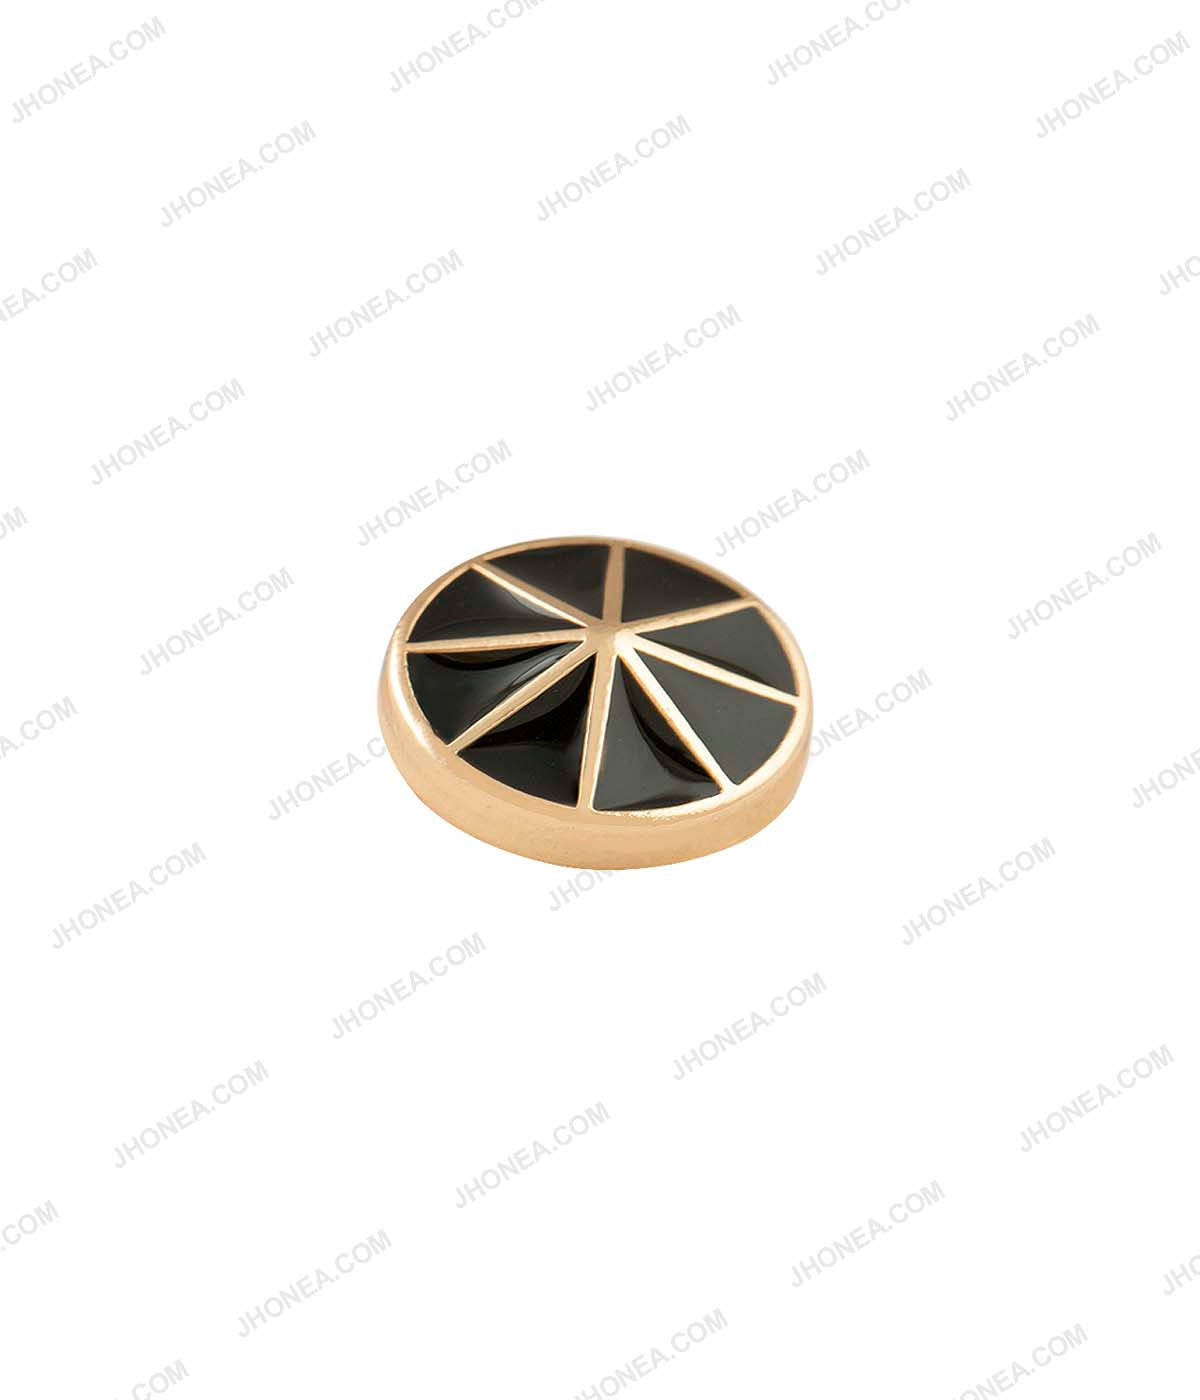 Black Enamel Shiny Wheel Design Surface Shirt Buttons